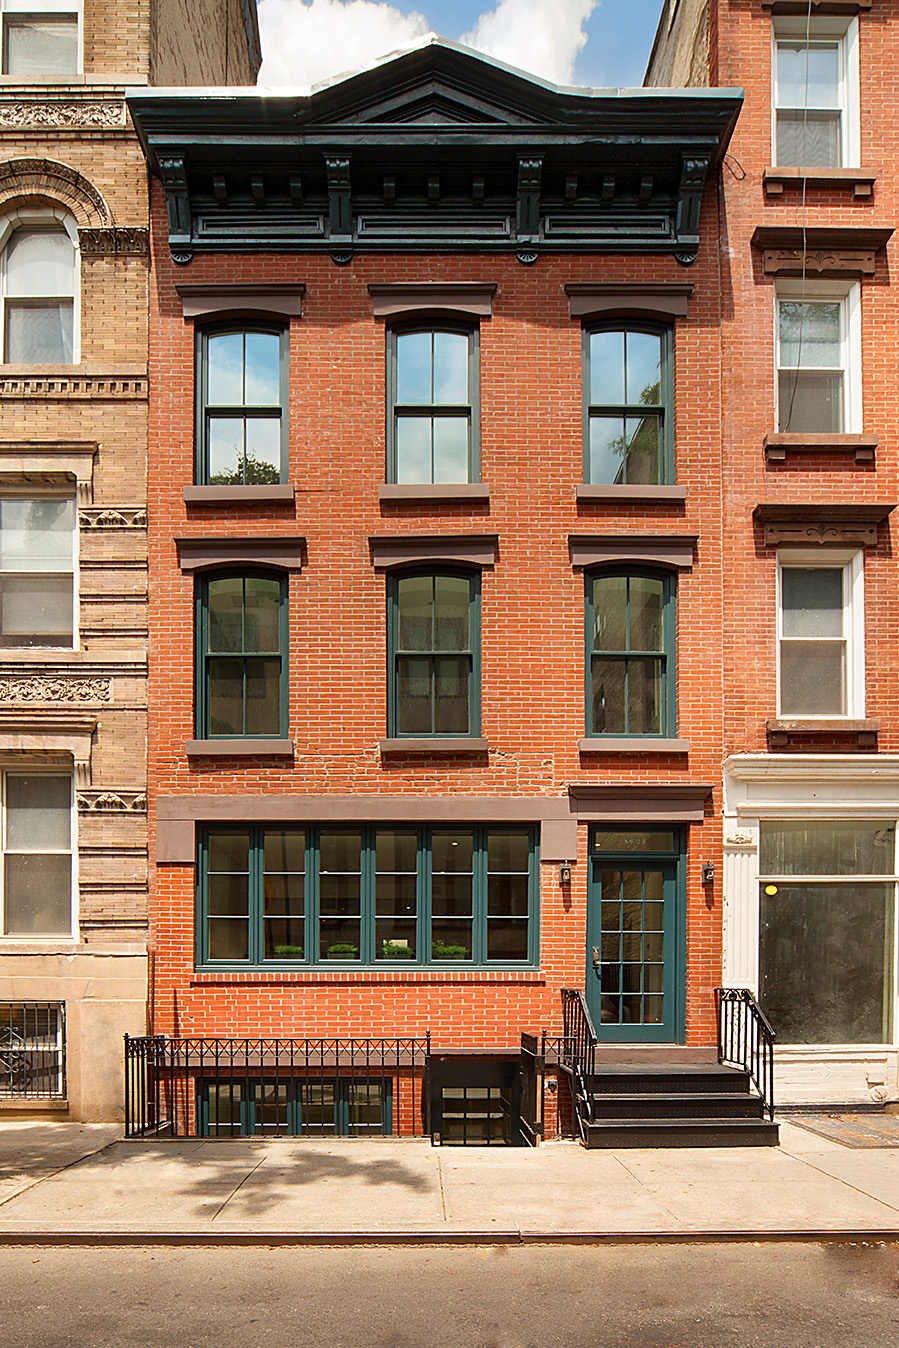 Townhouse renovation Manhattan nyc new york city West Village high-end luxury single family home design interiors